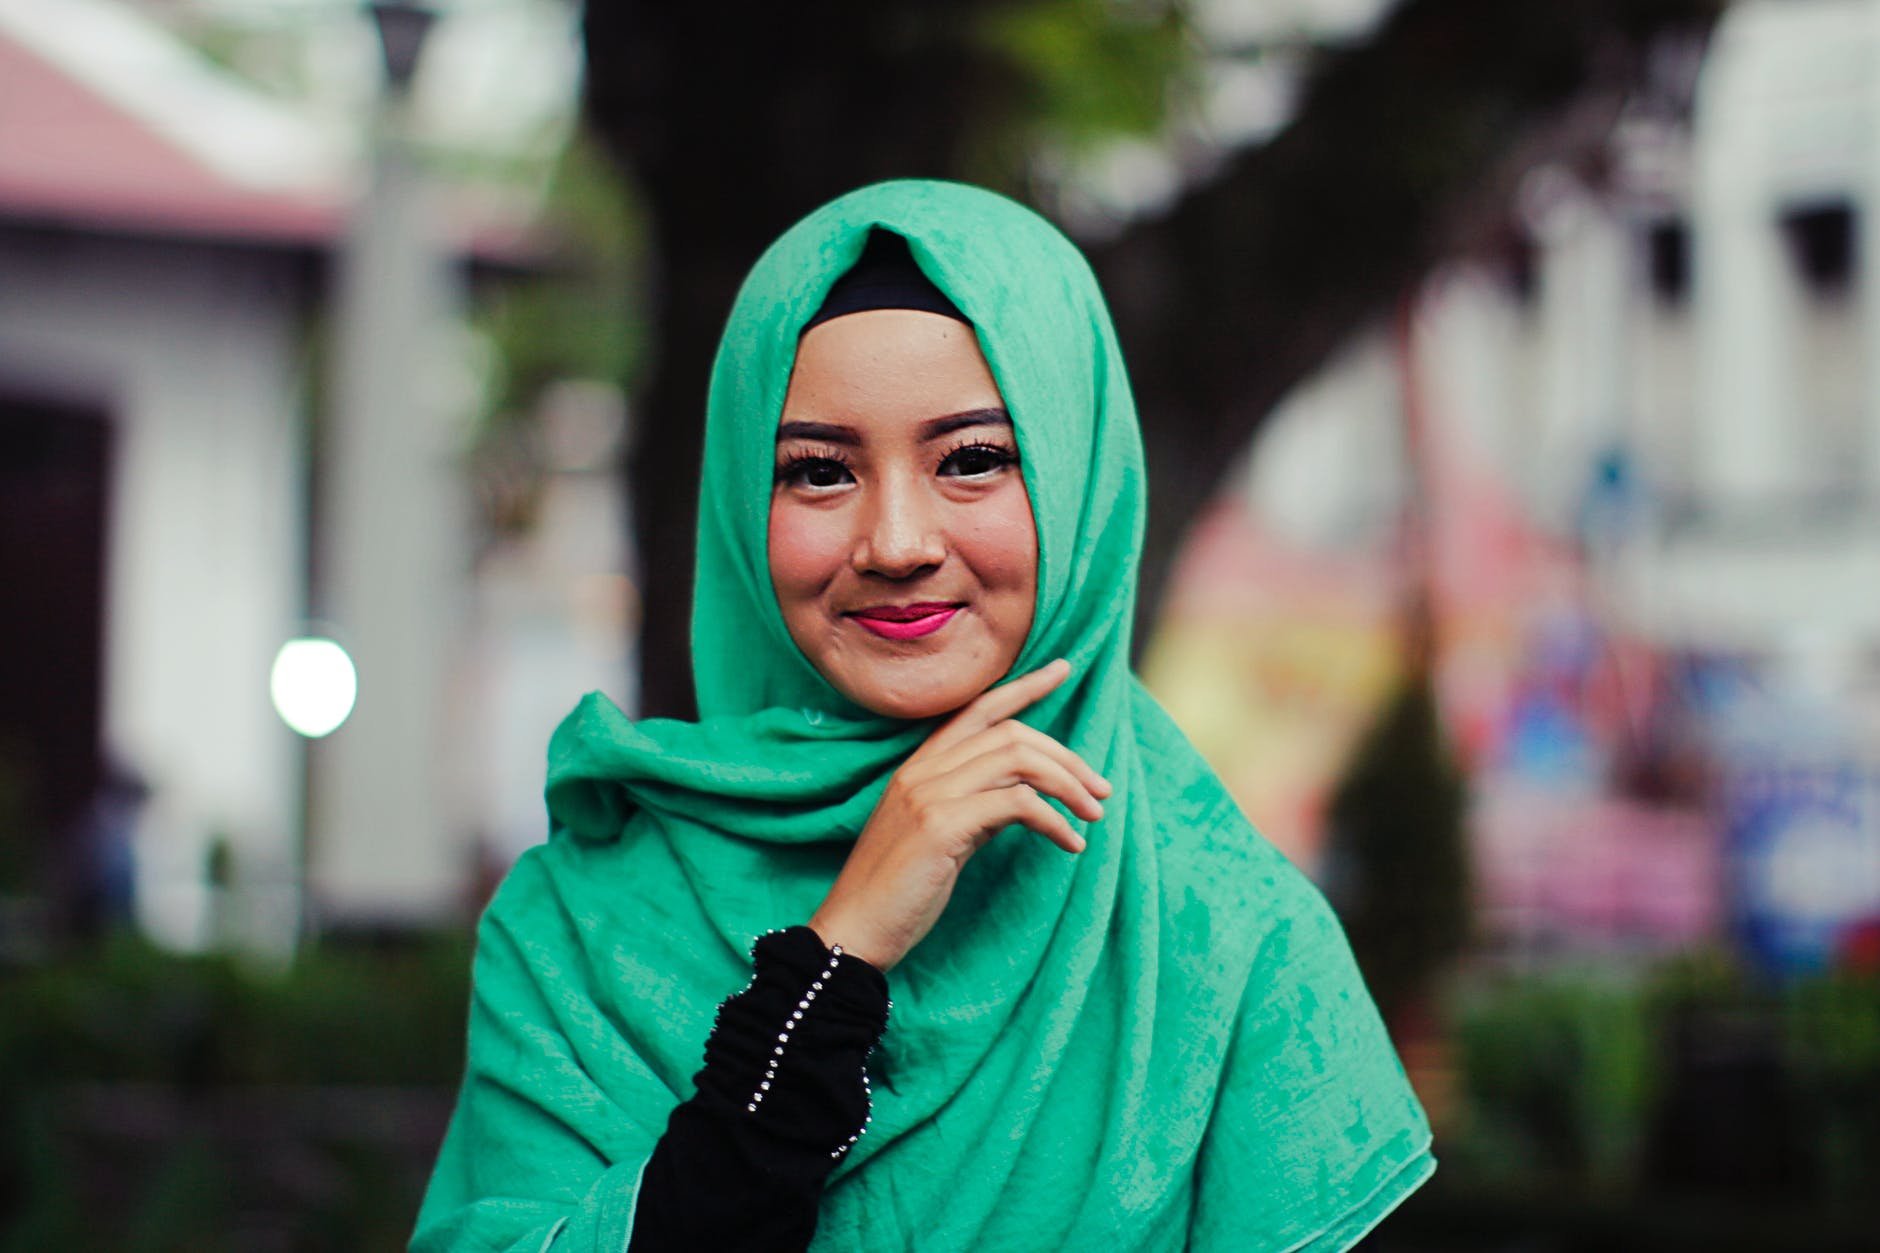 woman wearing green hijab smiling